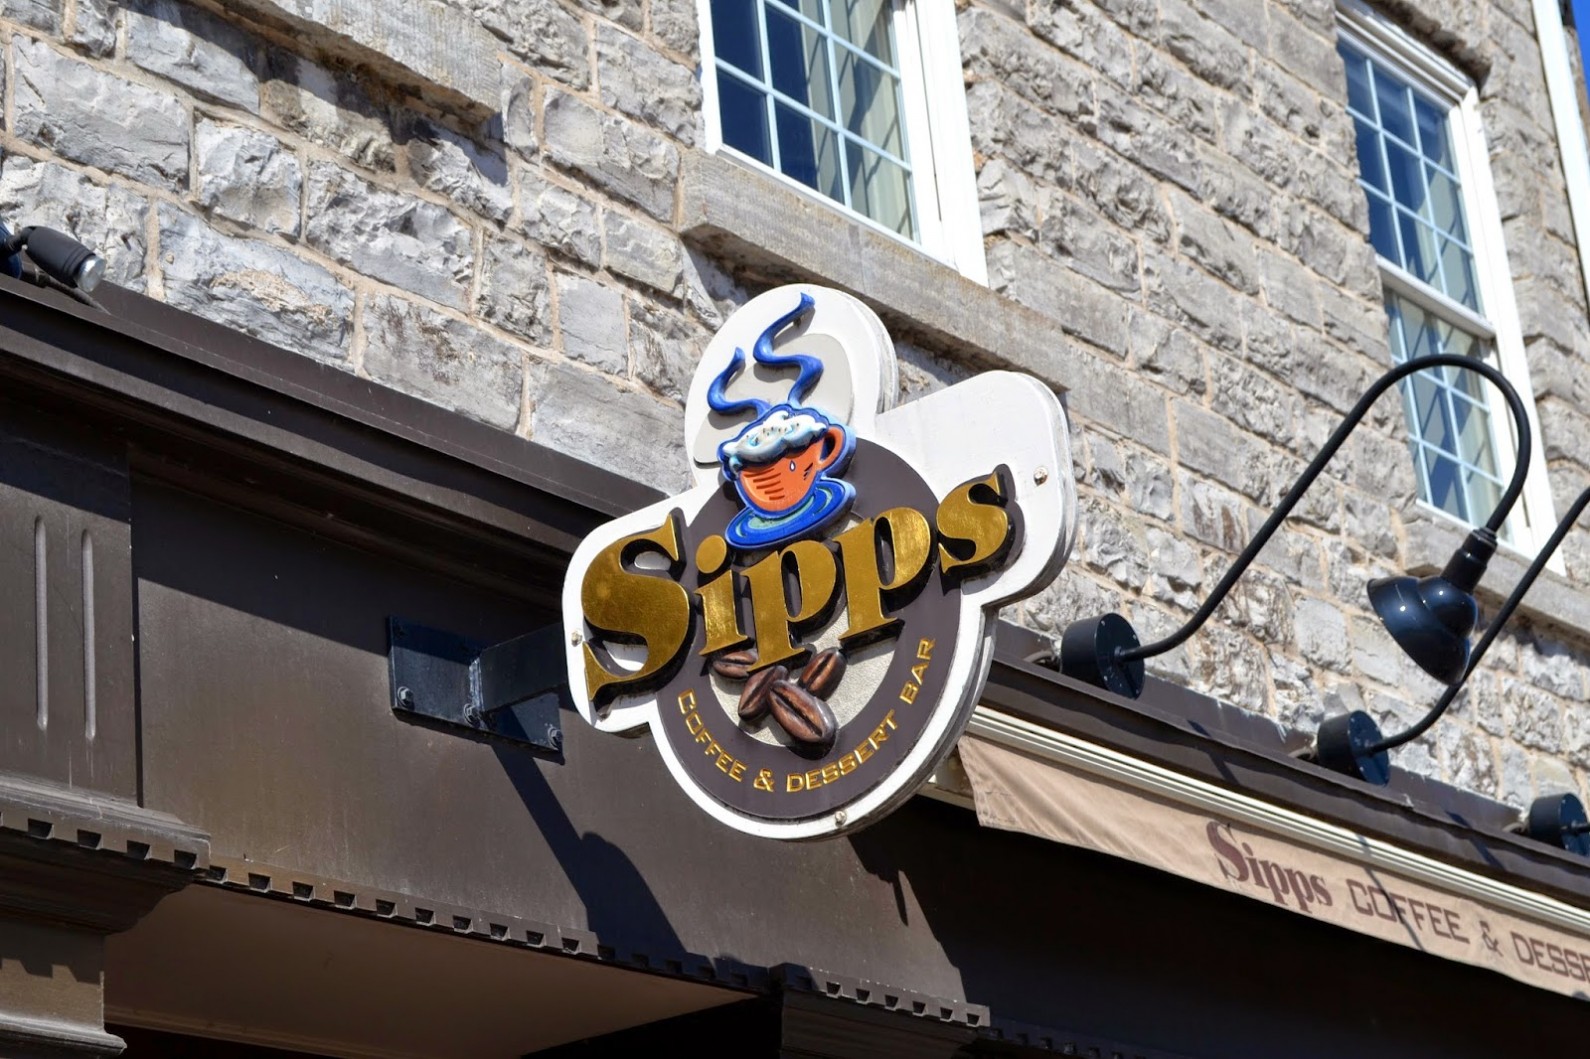 Sipps Coffee & Dessert Bar - Kingston, Ontario